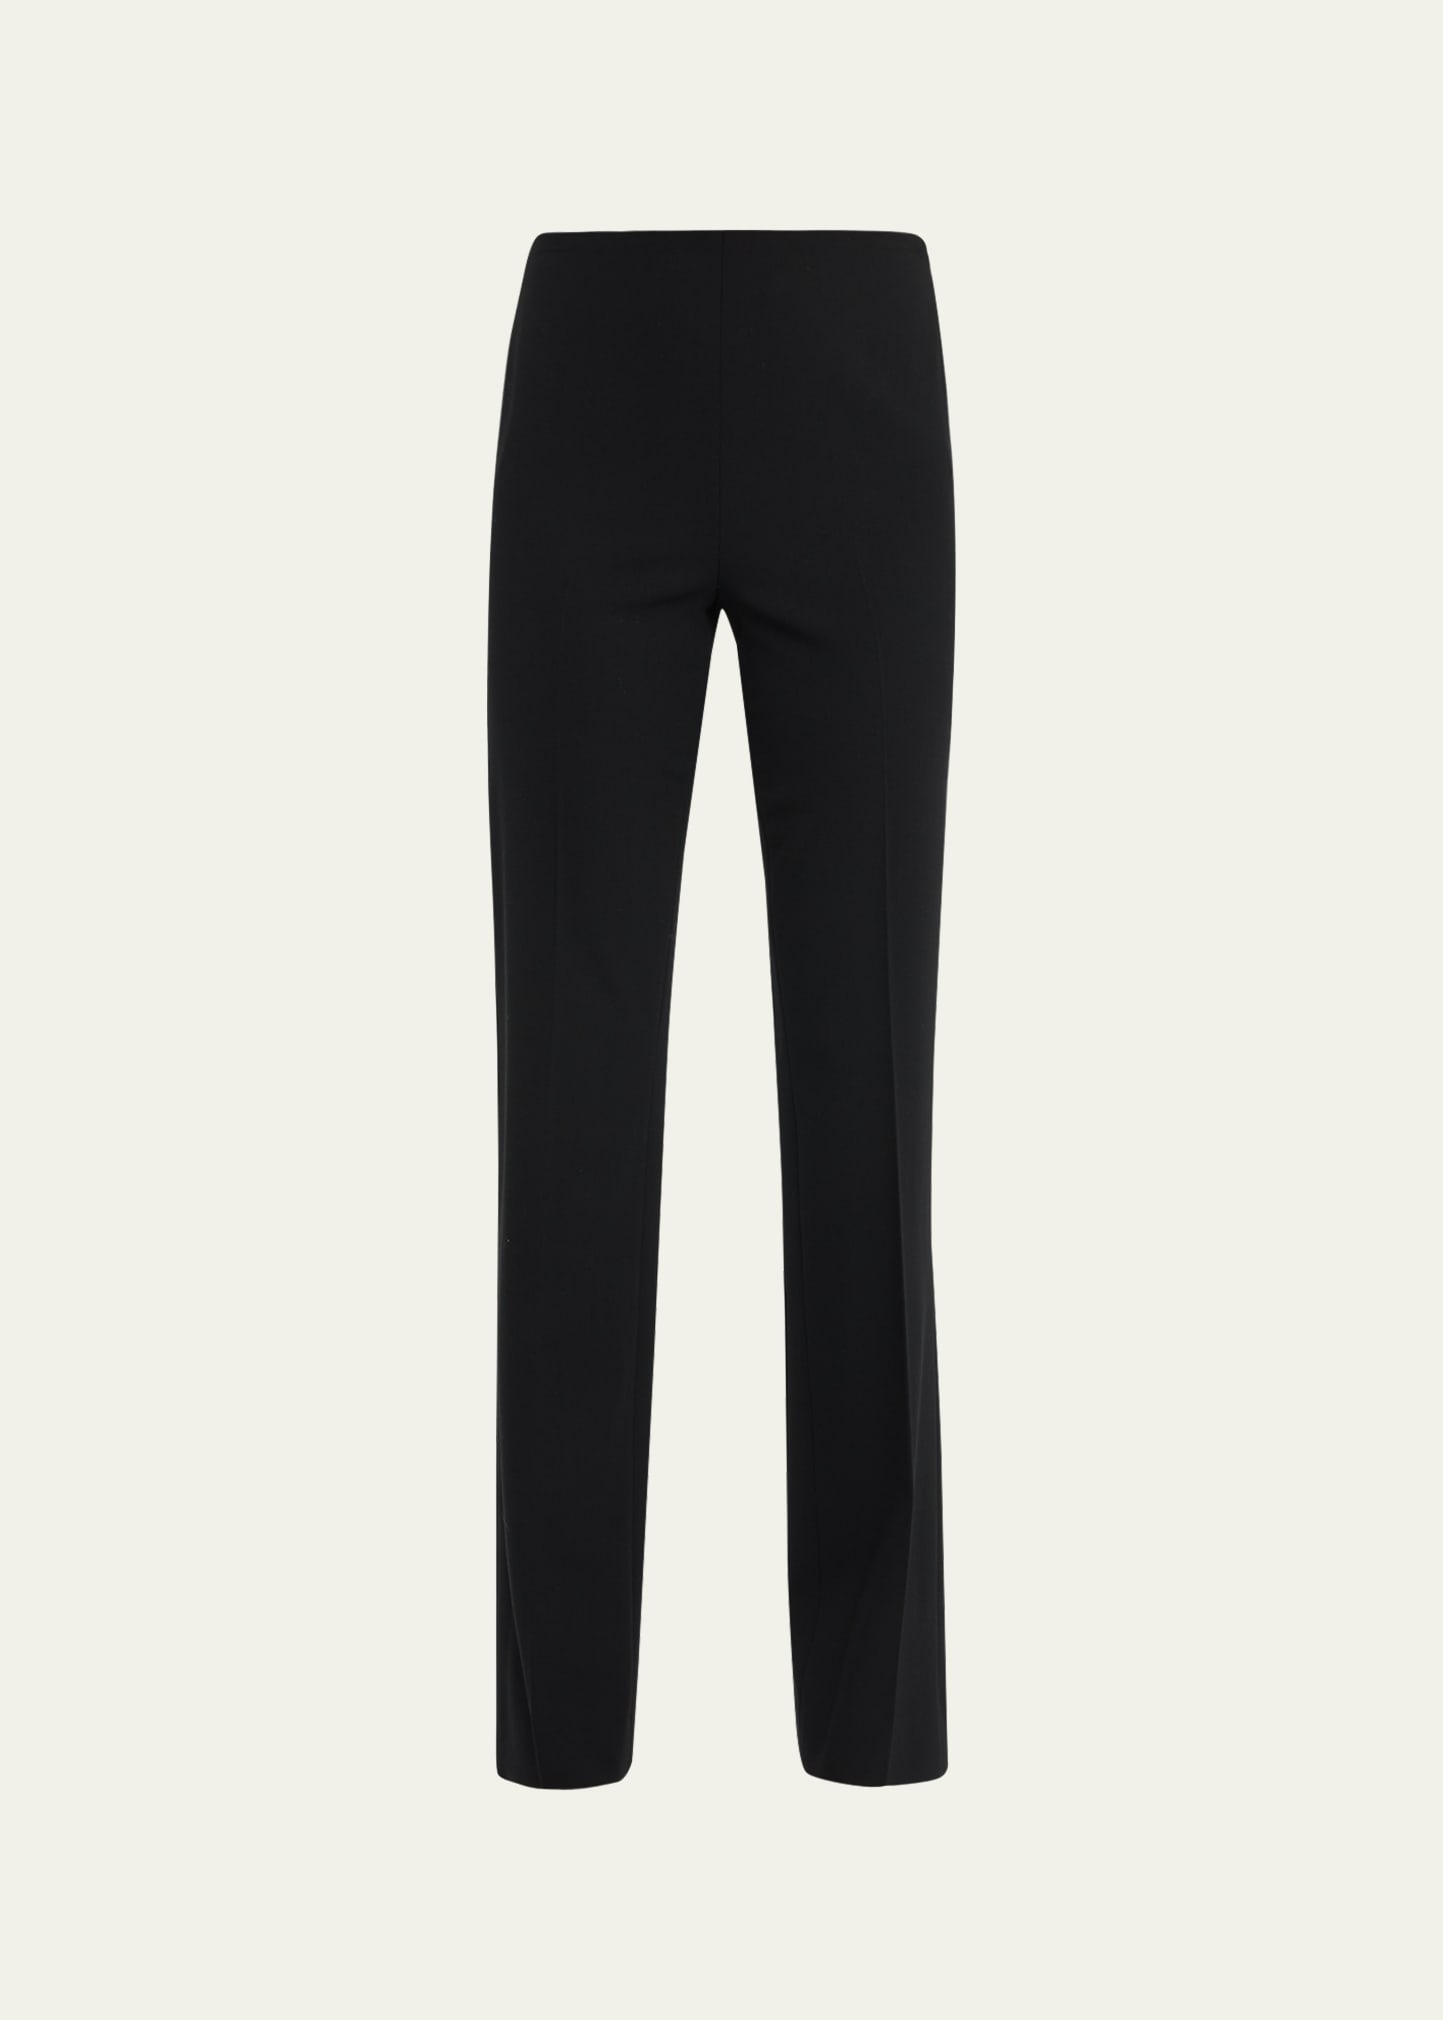 Alandra Side-Zip Stretch-Wool Pants, Black